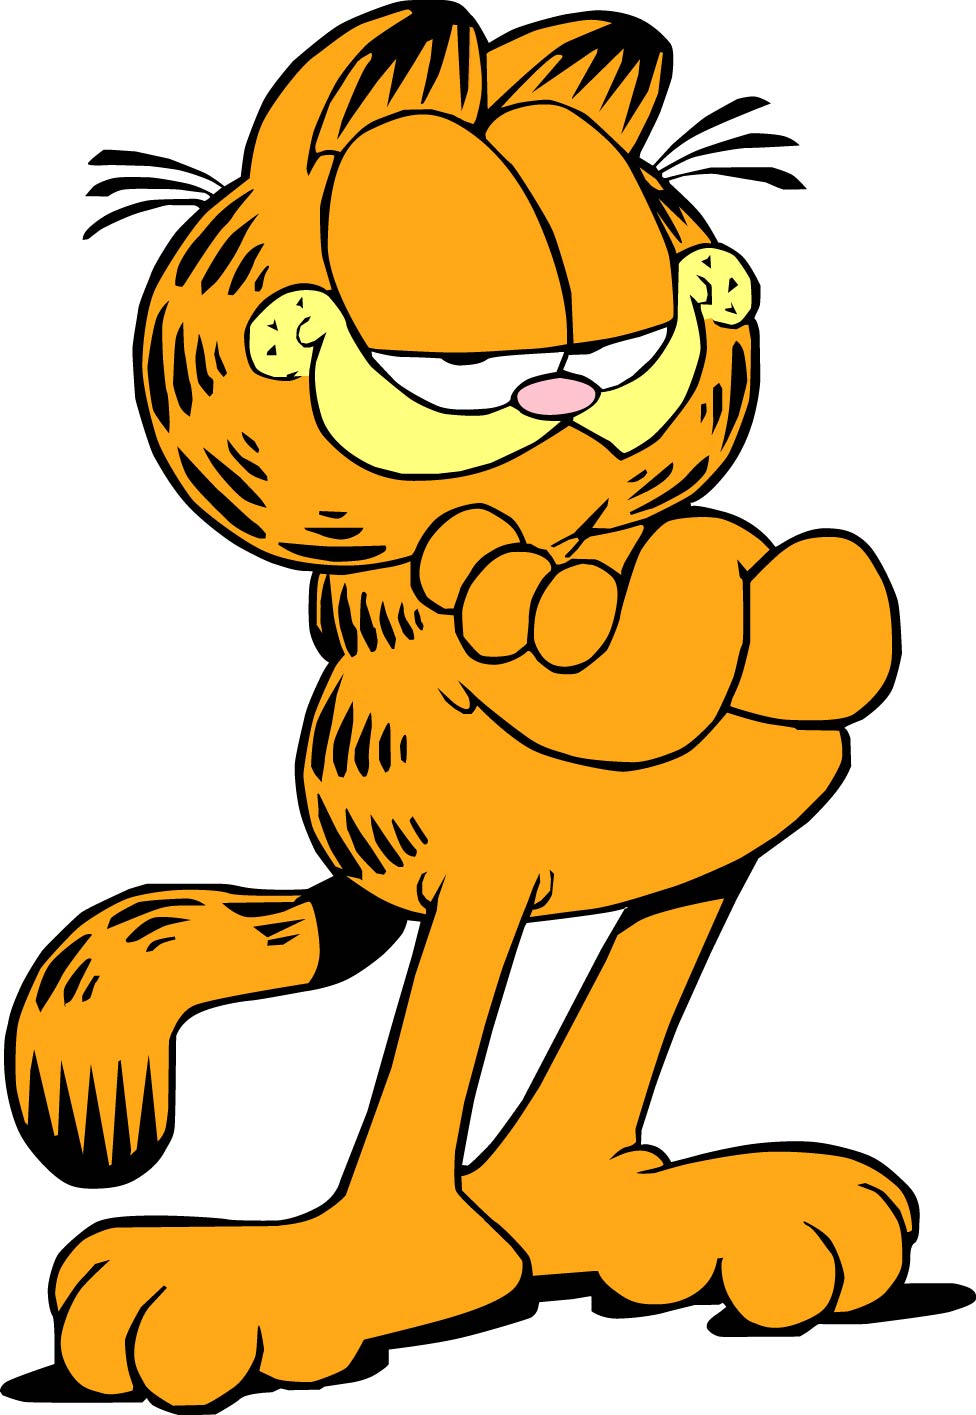 Garfield_by_is6ca.jpg